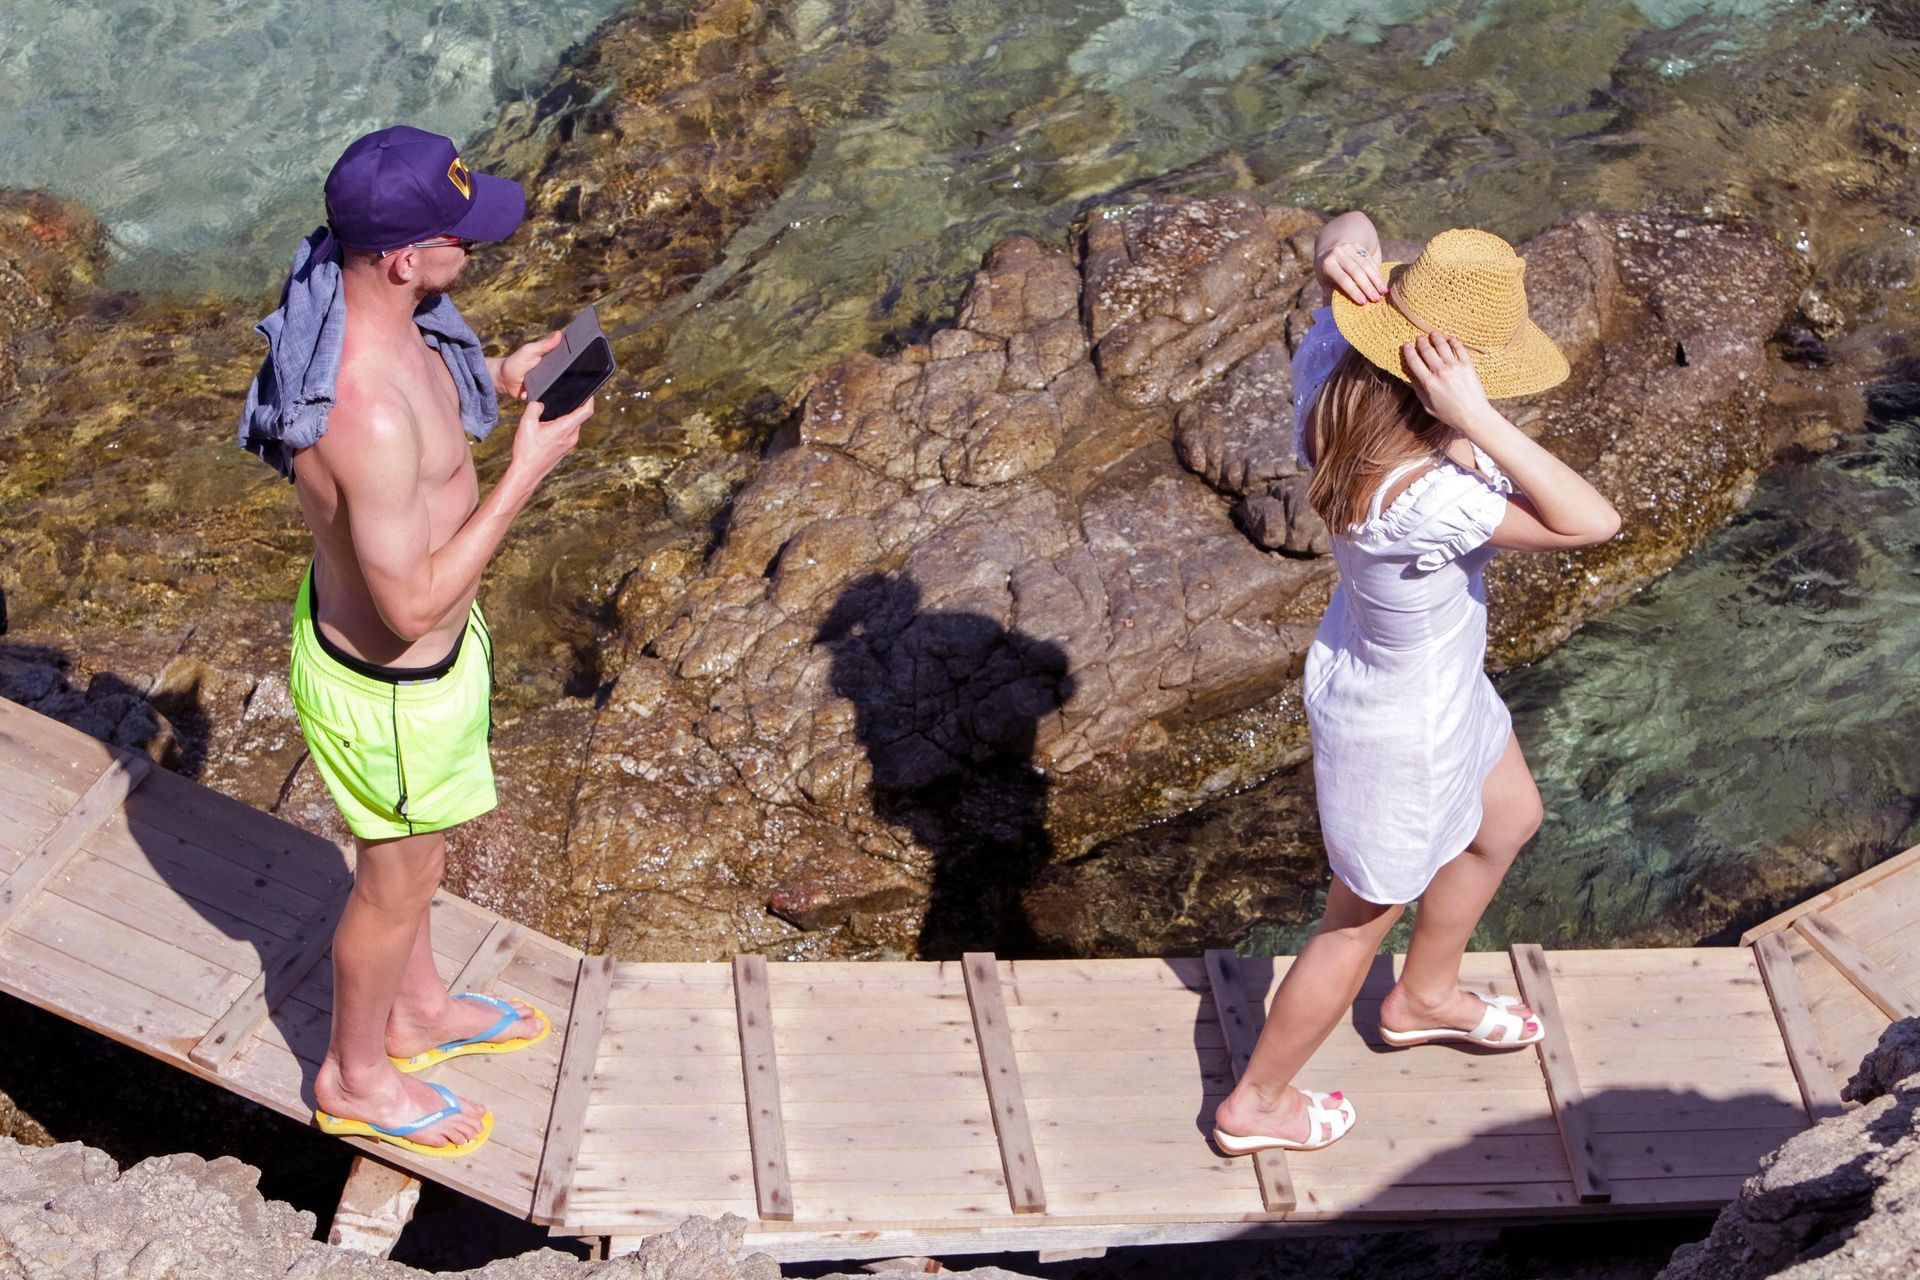 Catherine Harding & Jorginho Enjoy Their Holidays in Mykonos (48 Photos)